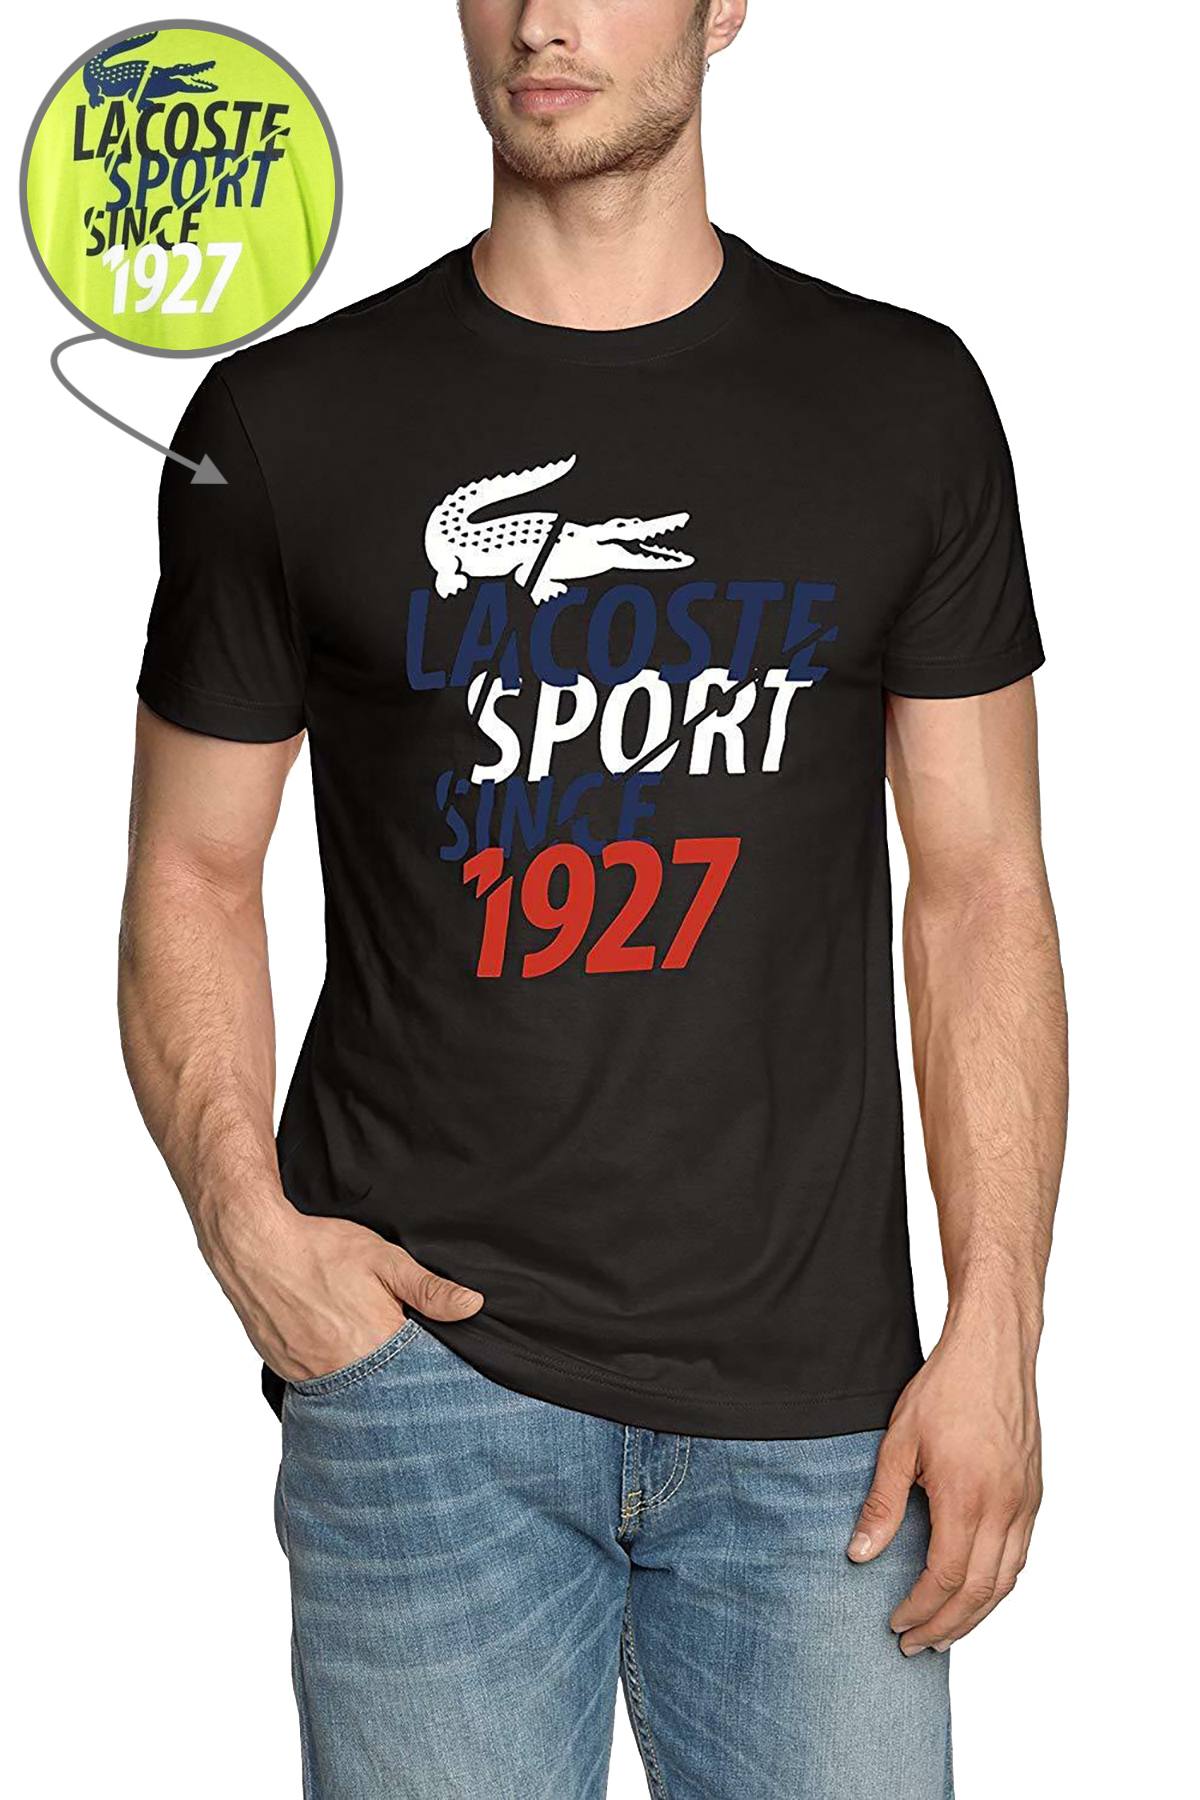 Lacoste Sport Neon-Green Graphic 1927 T-Shirt | CheapUndies